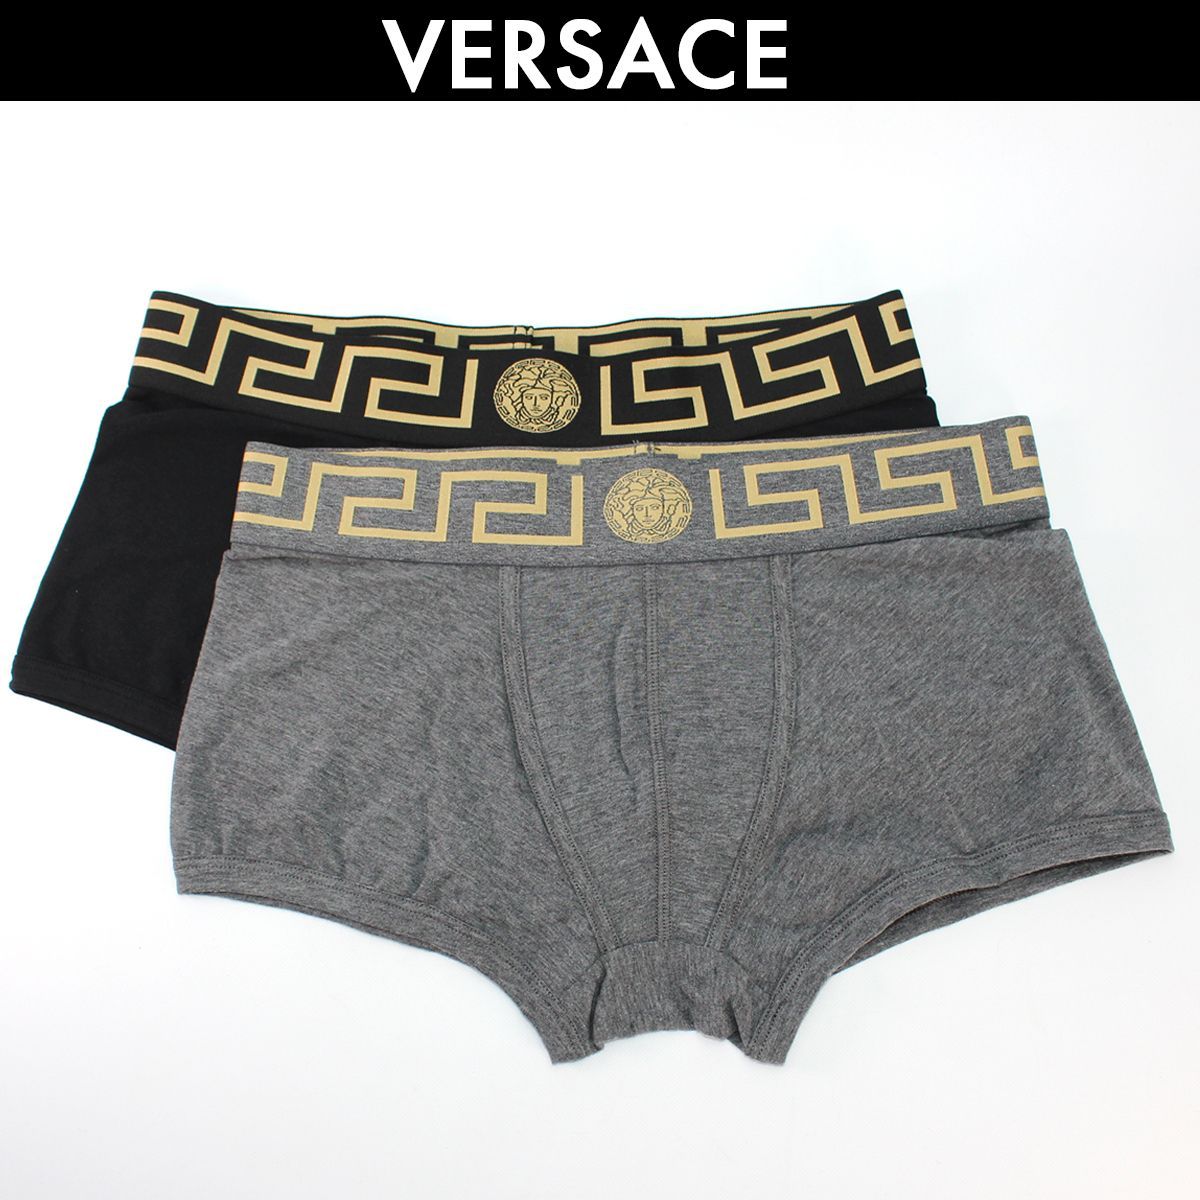 【 Versace 】ボクサーパンツ 新品未使用品